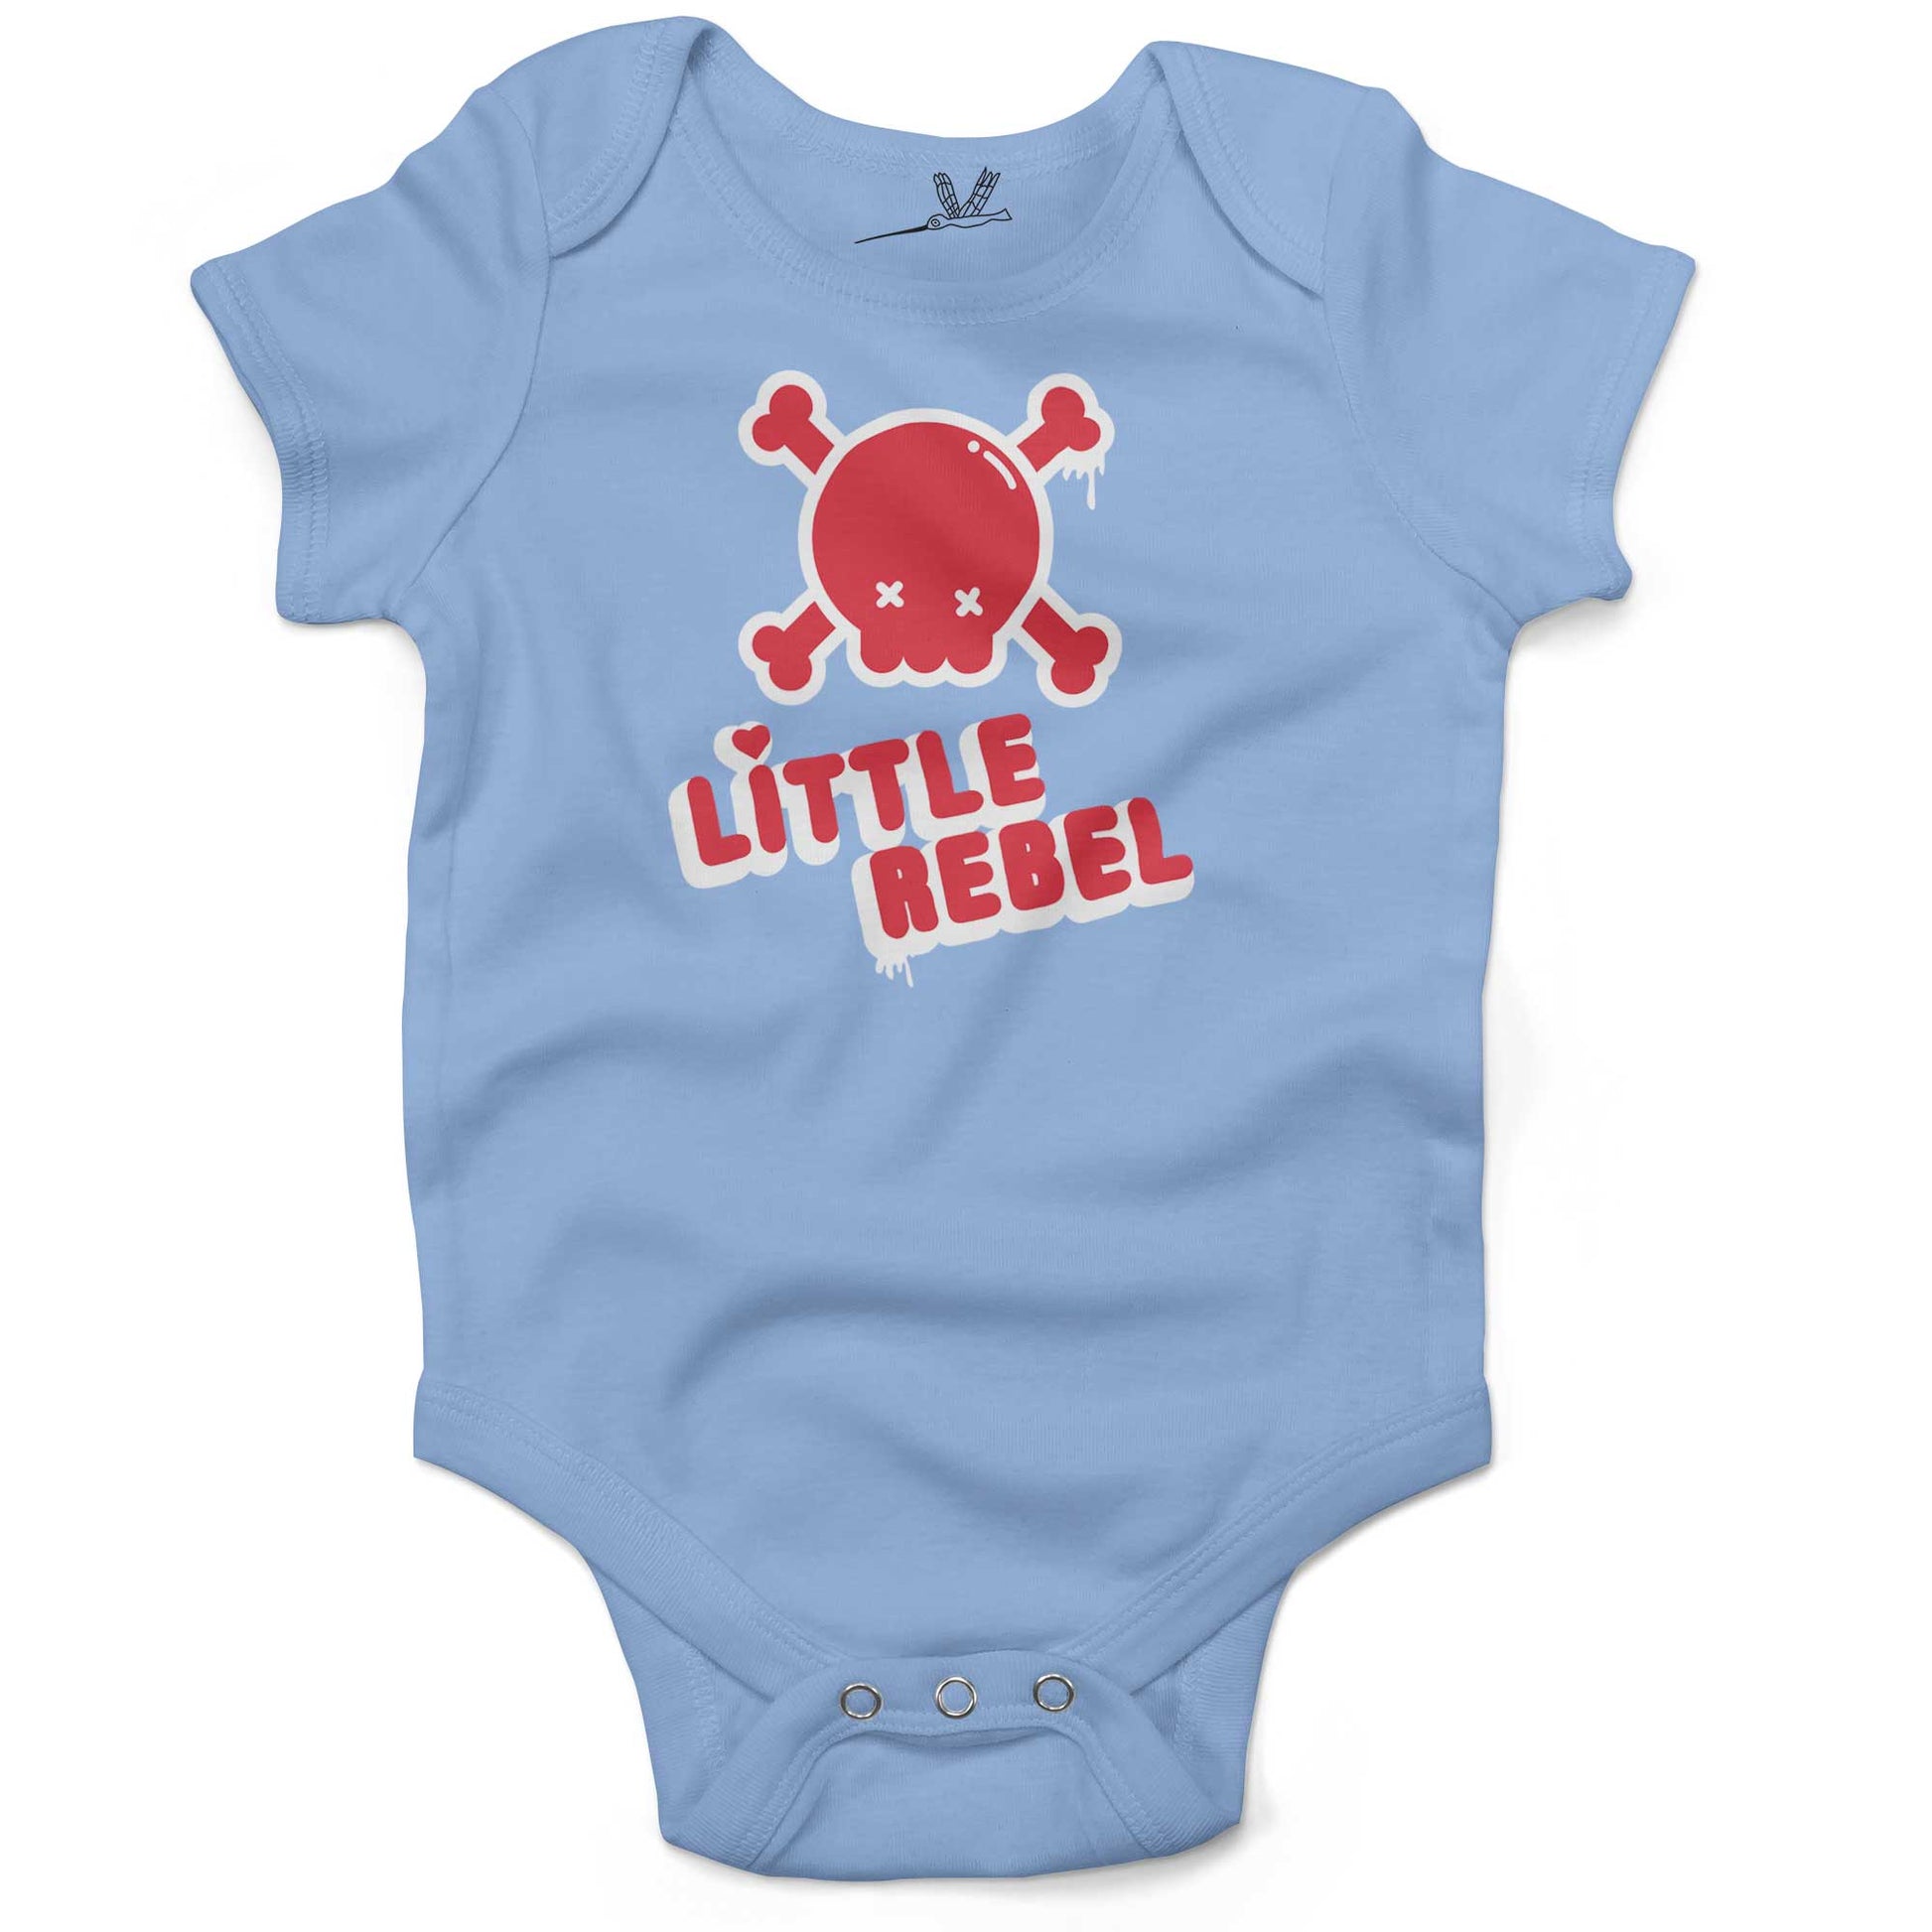 Little Rebel Infant Bodysuit or Raglan Baby Tee-Organic Baby Blue-3-6 months